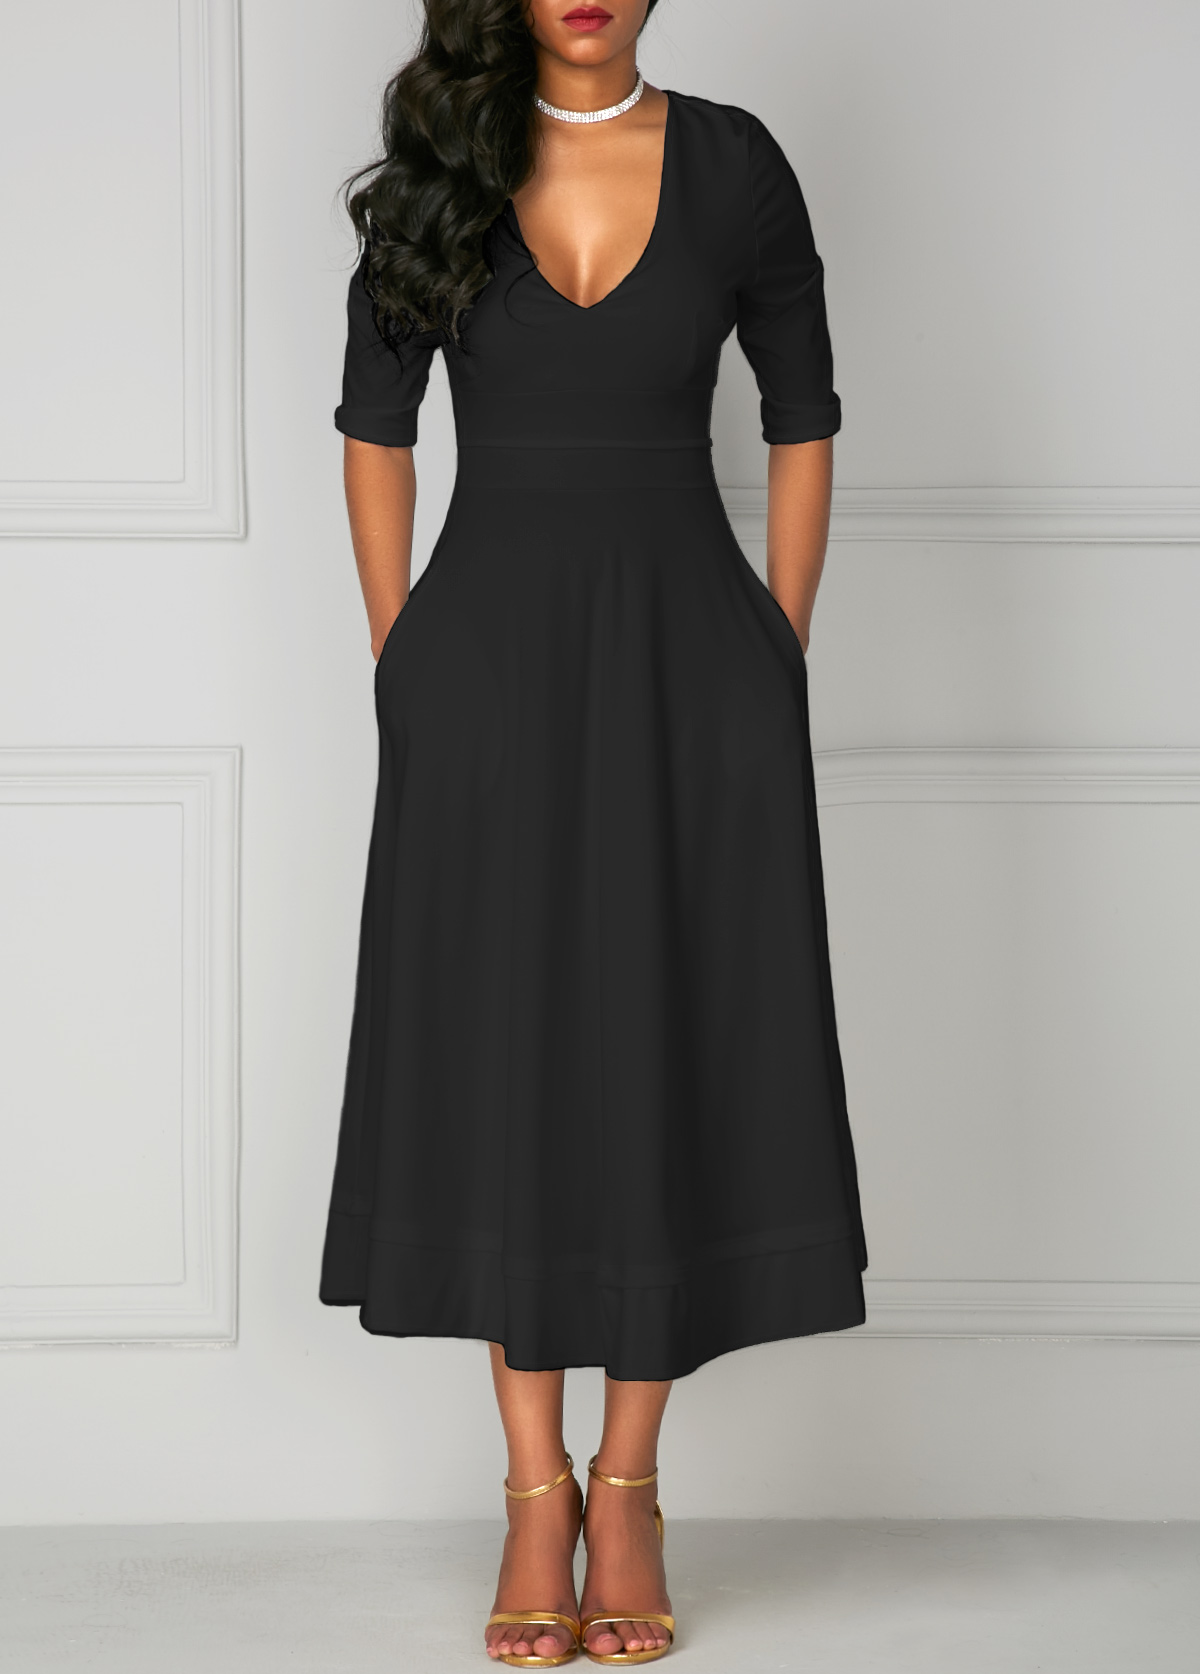 Black V Neck Pocket Design Half  Sleeve  Dress  modlily com 